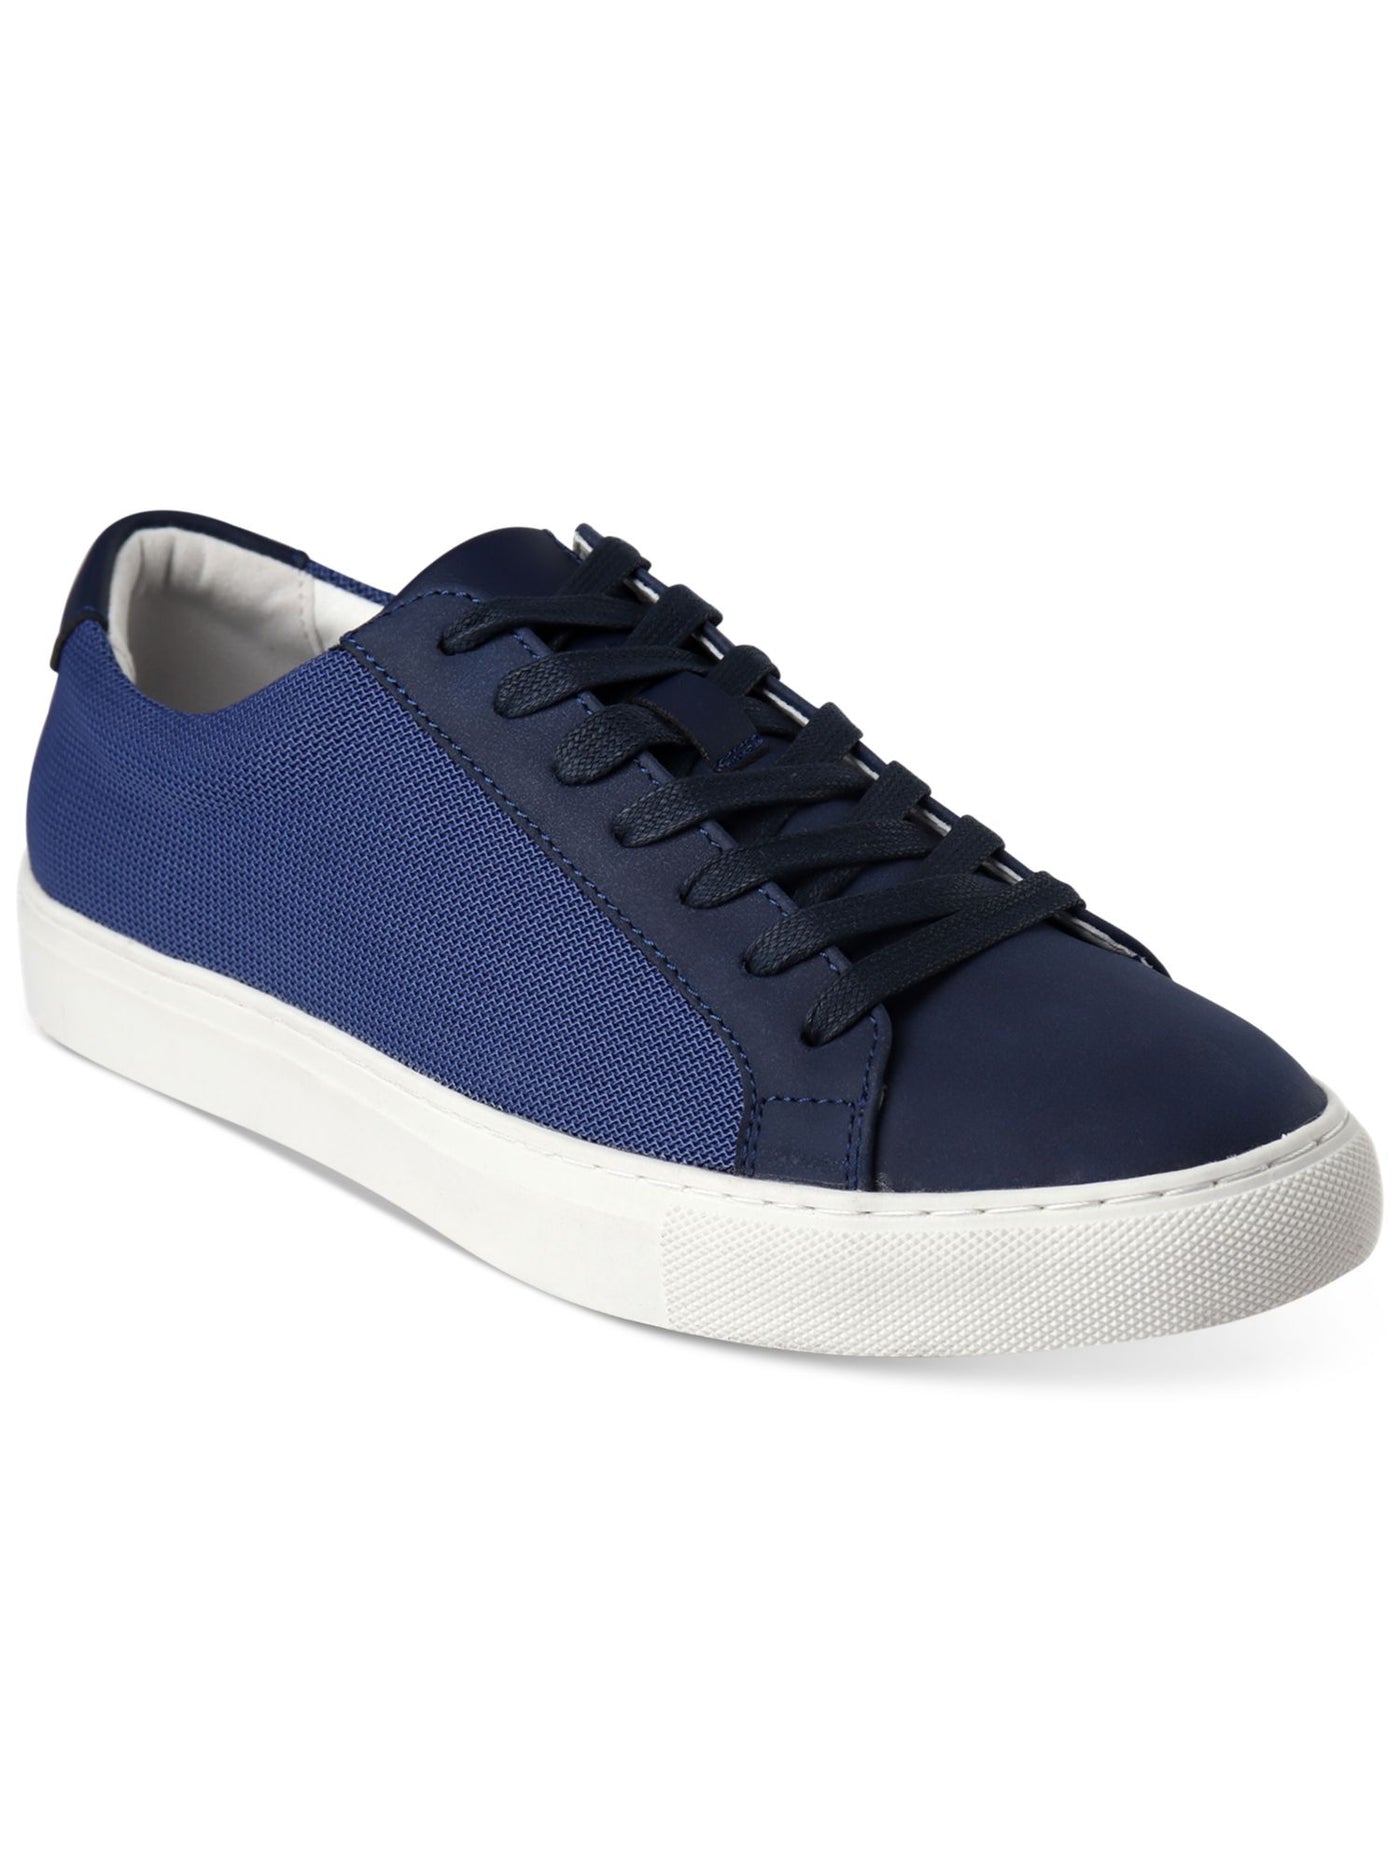 ALFANI Mens Blue Comfort Grayson Round Toe Platform Lace-Up Athletic Sneakers Shoes 10 M